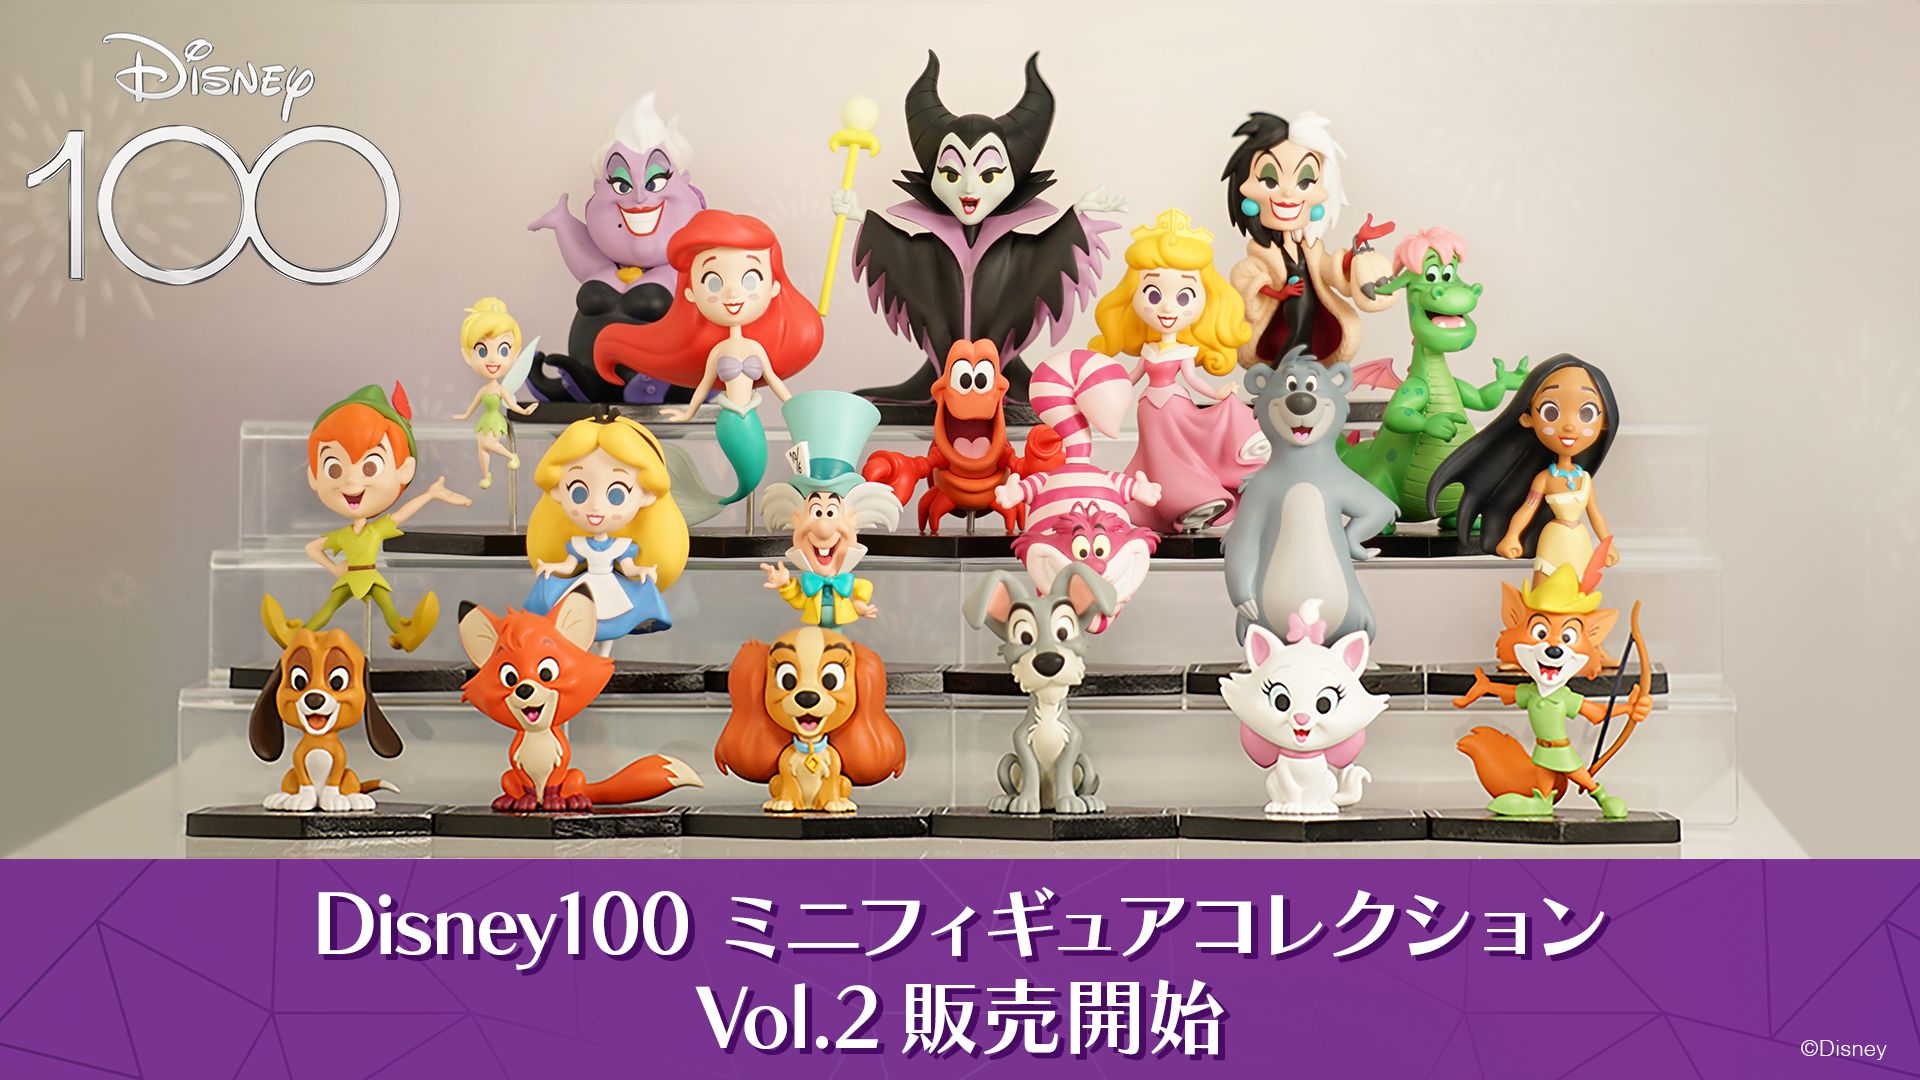 「Disney100 ミニフィギュアコレクション Vol.2」の一般販売が本日